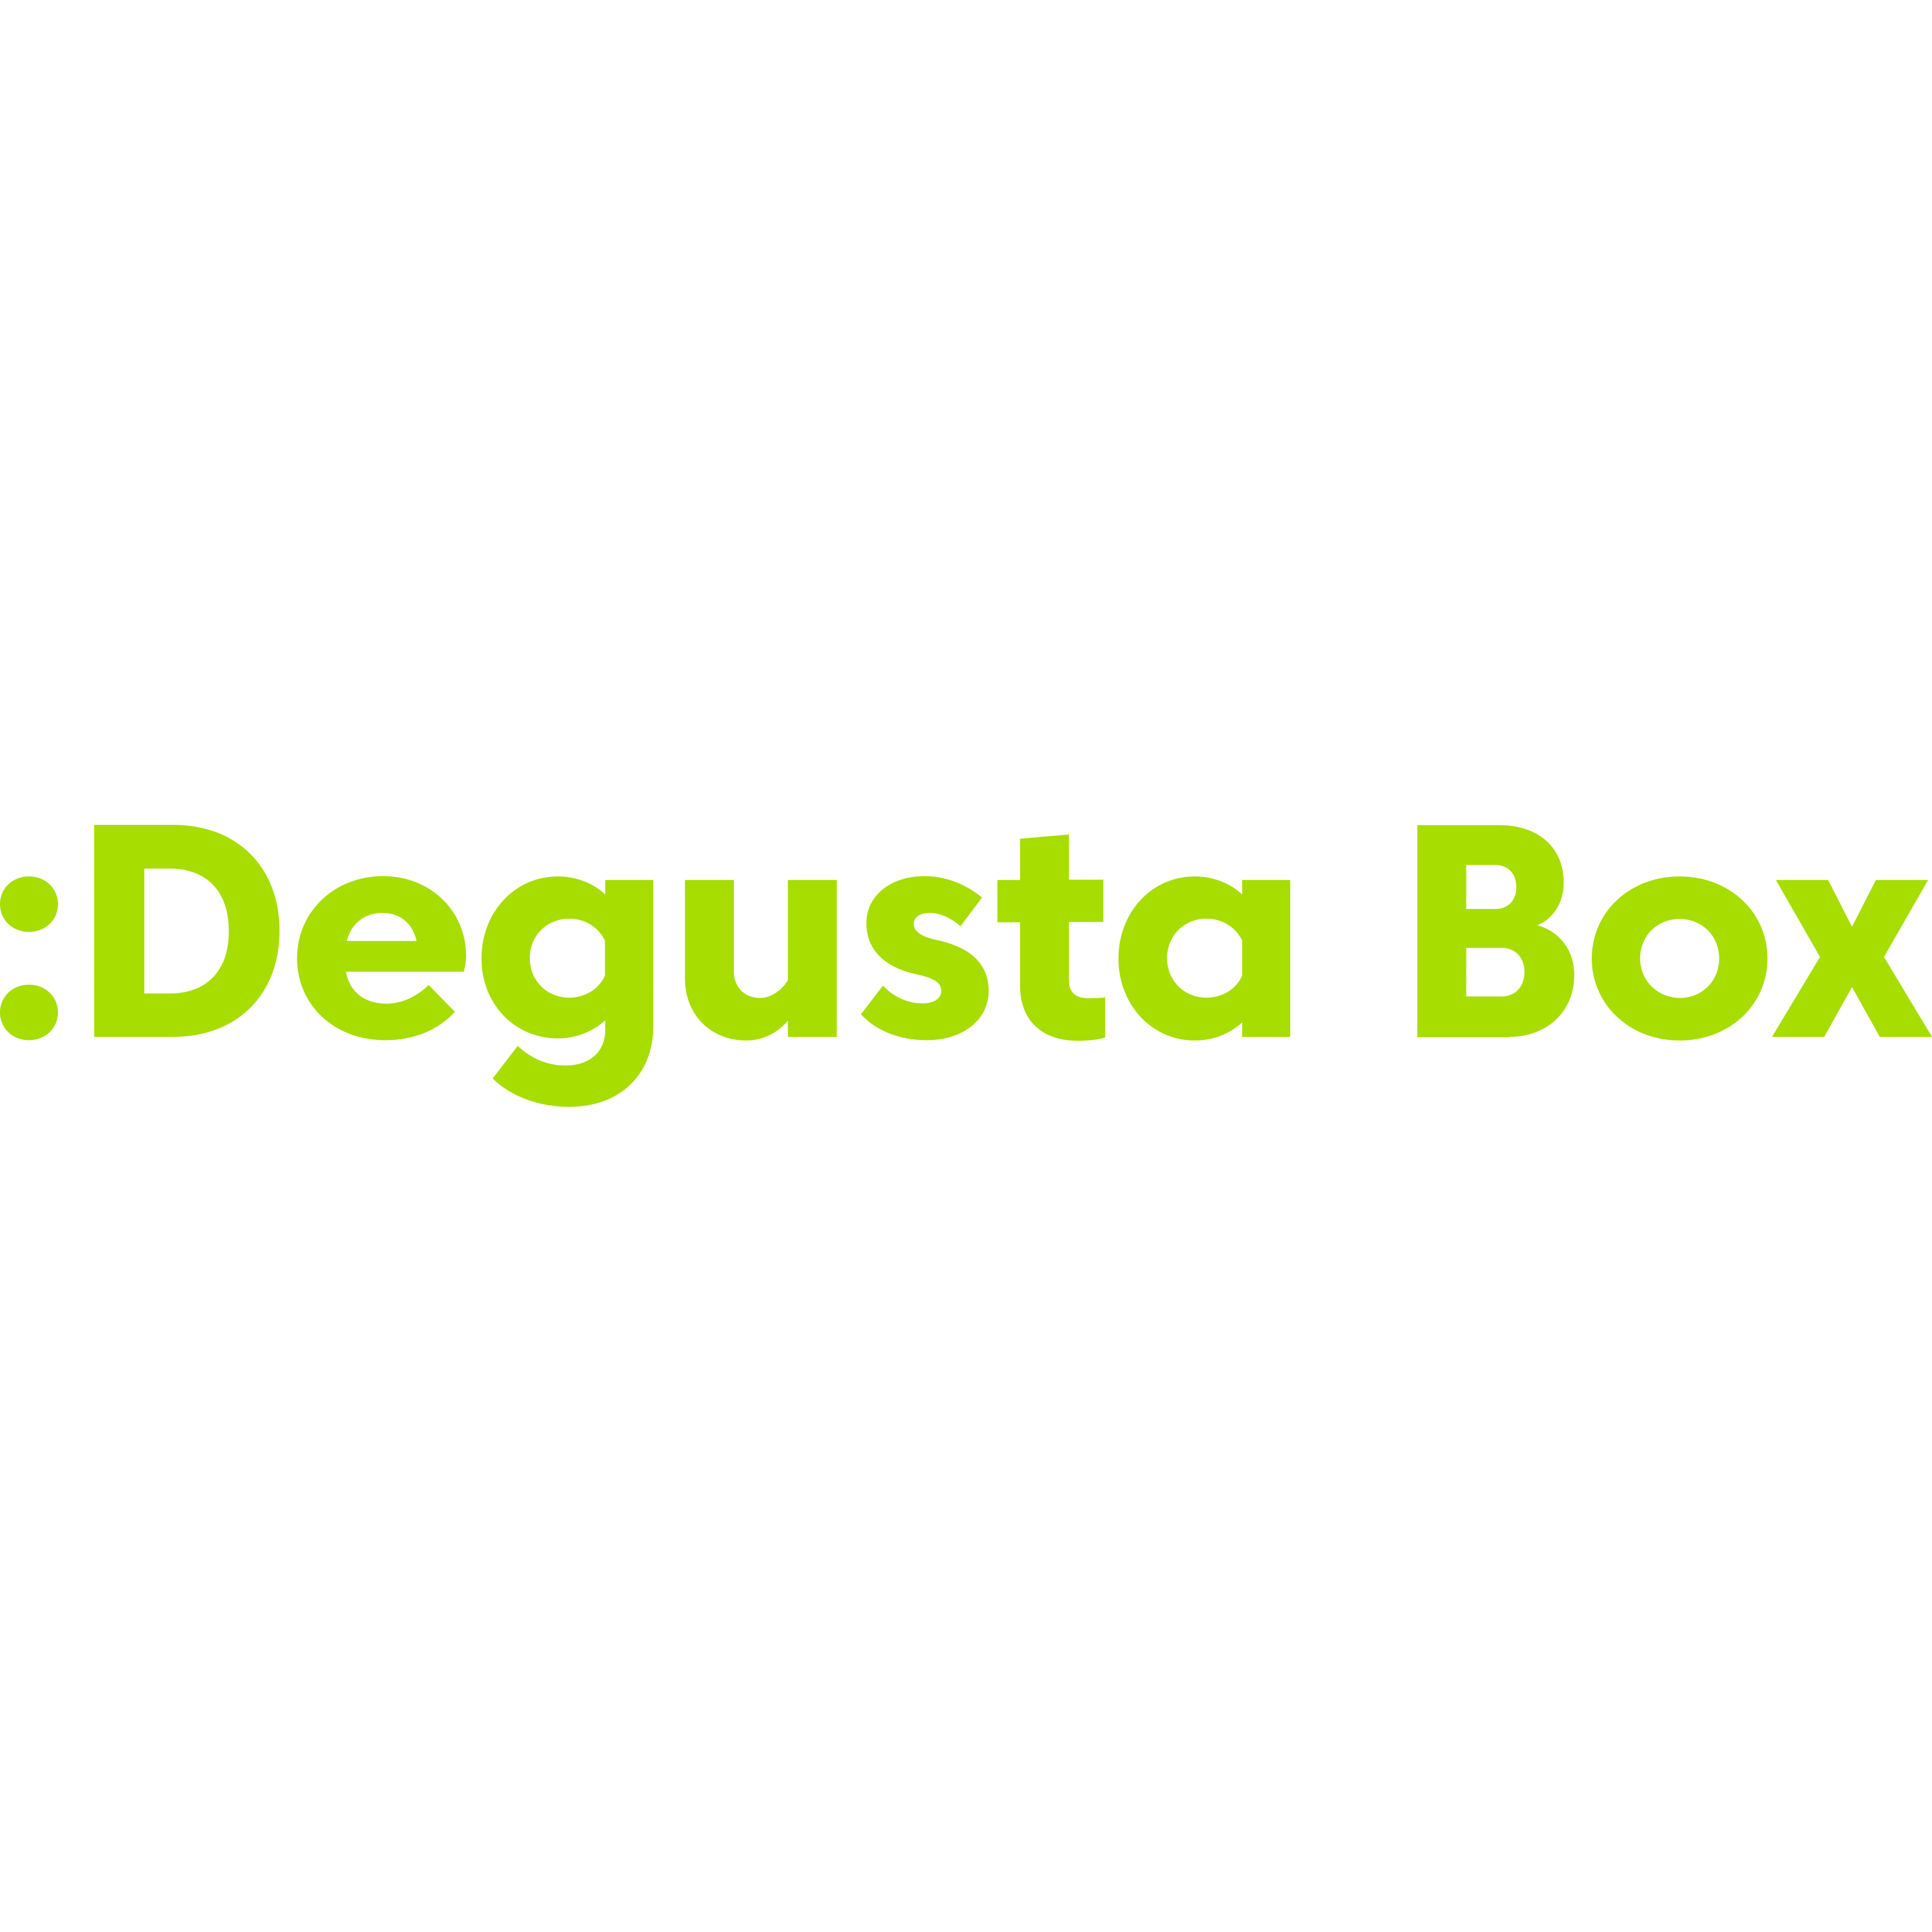 codice promozionale degustaboxcodice sconto degusta boxdegustabox sconto